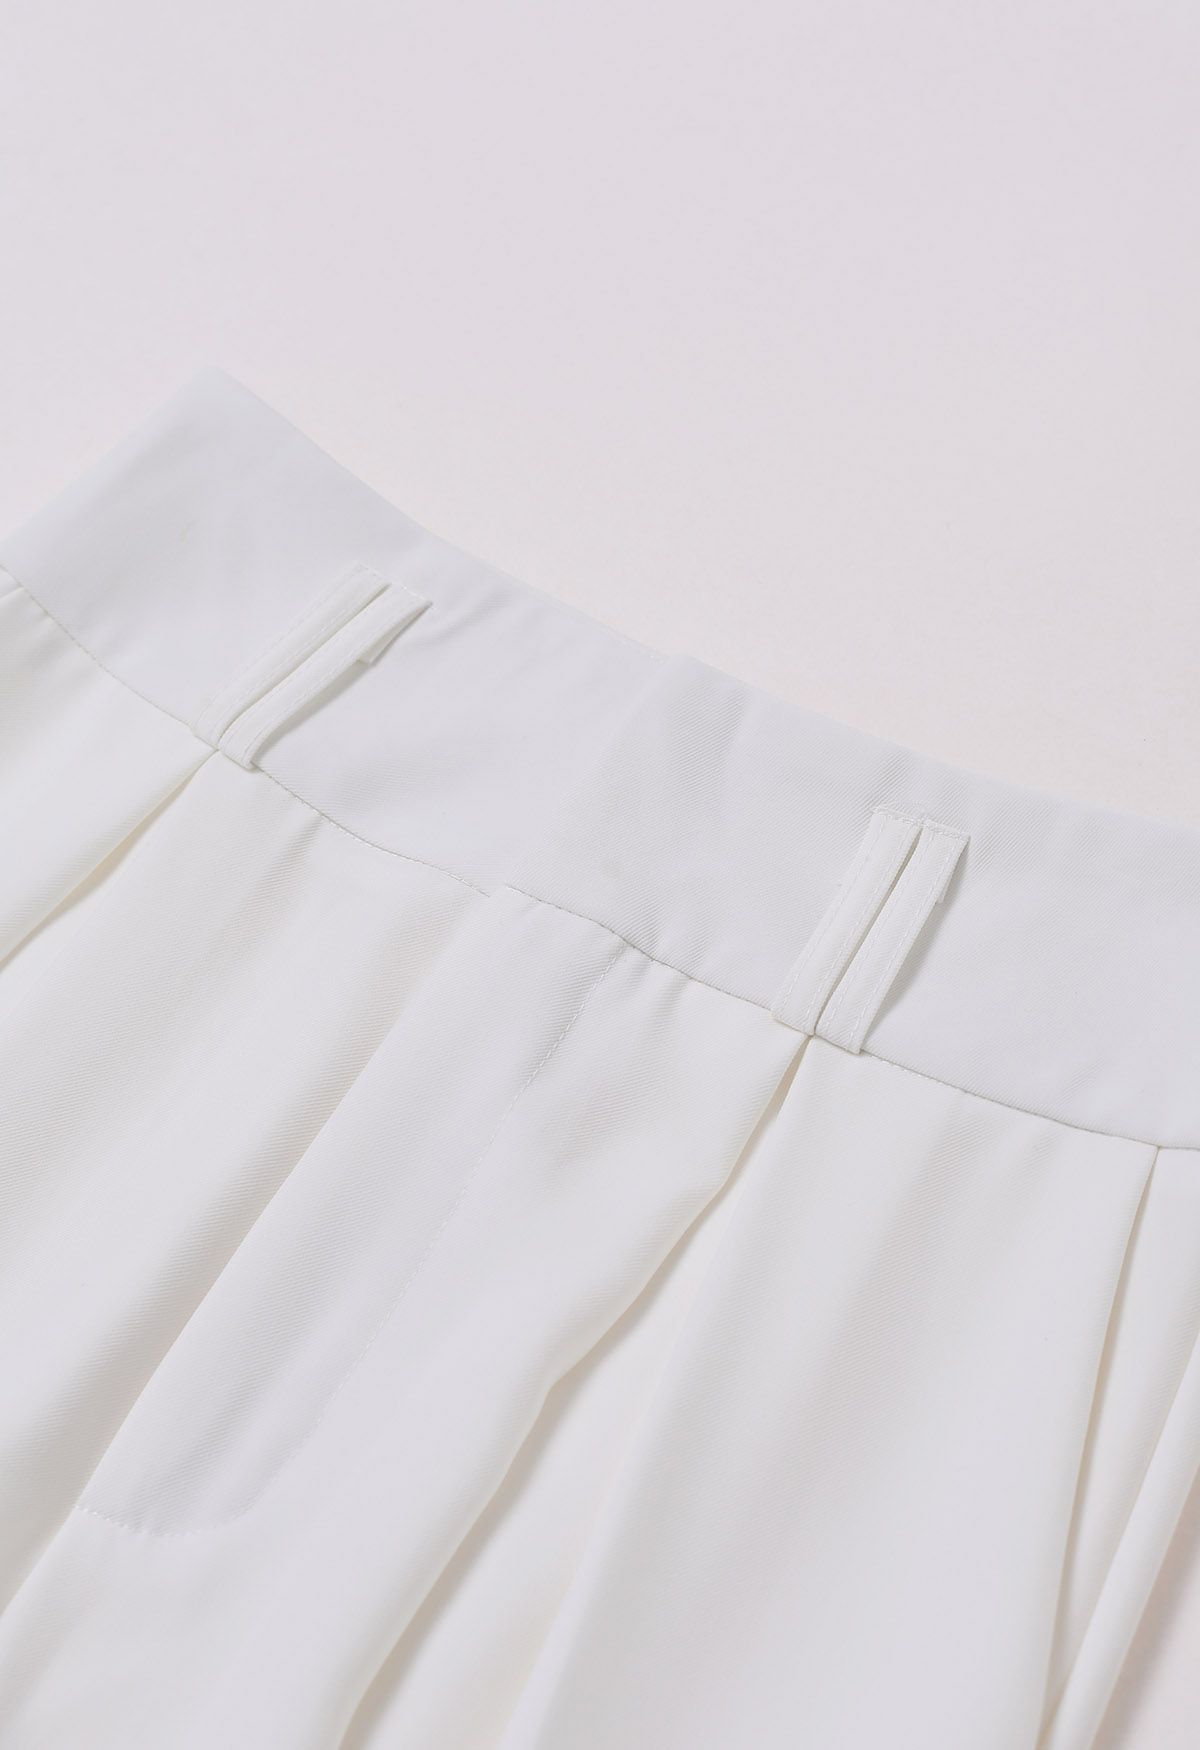 Side Pocket Wide Leg Pleated Pants in White